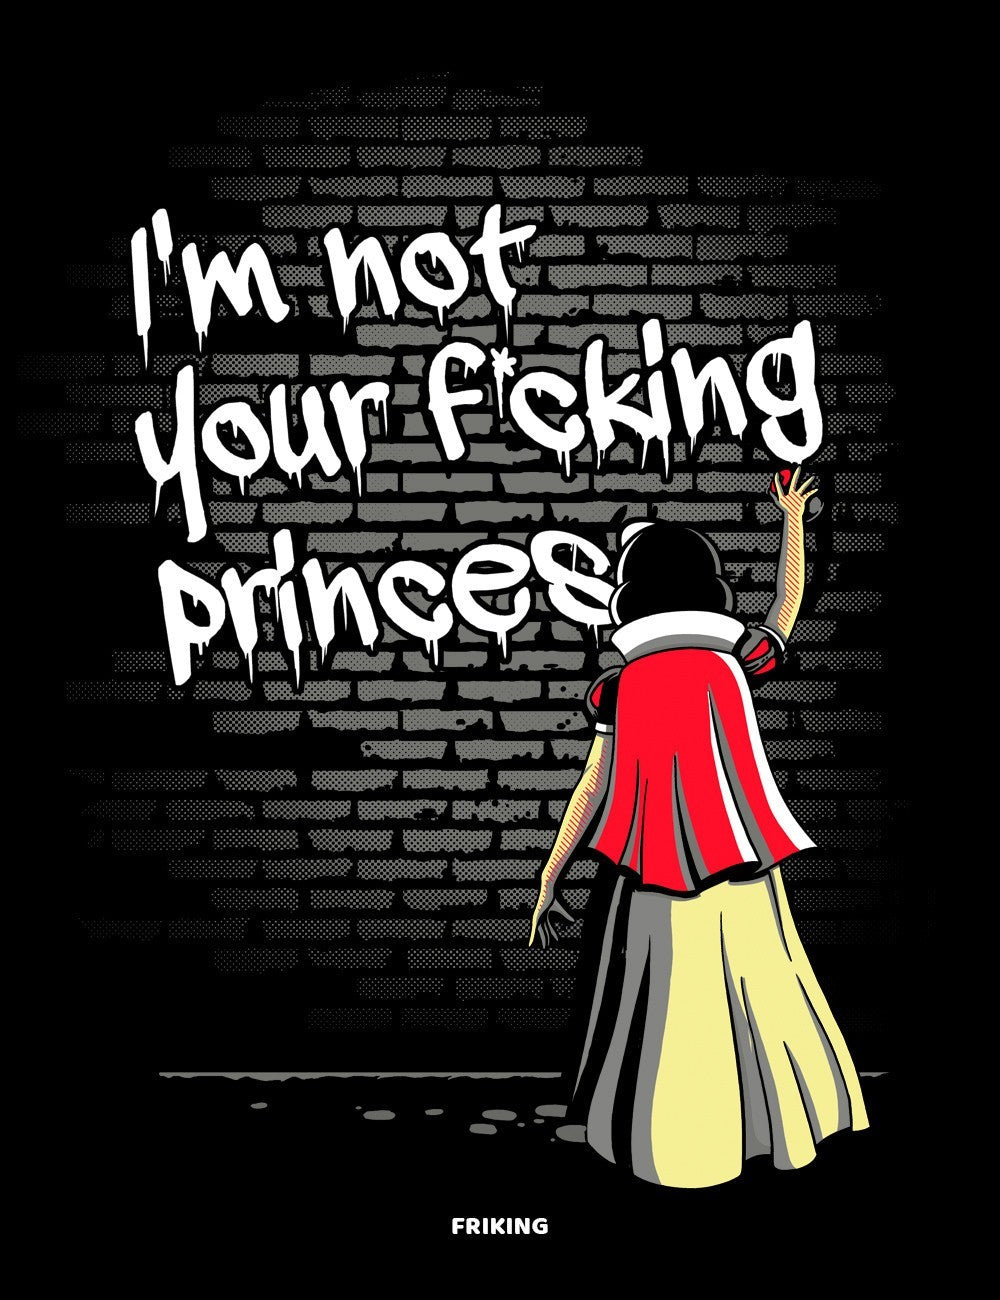  Im Not Your F*cking Princess Snow 